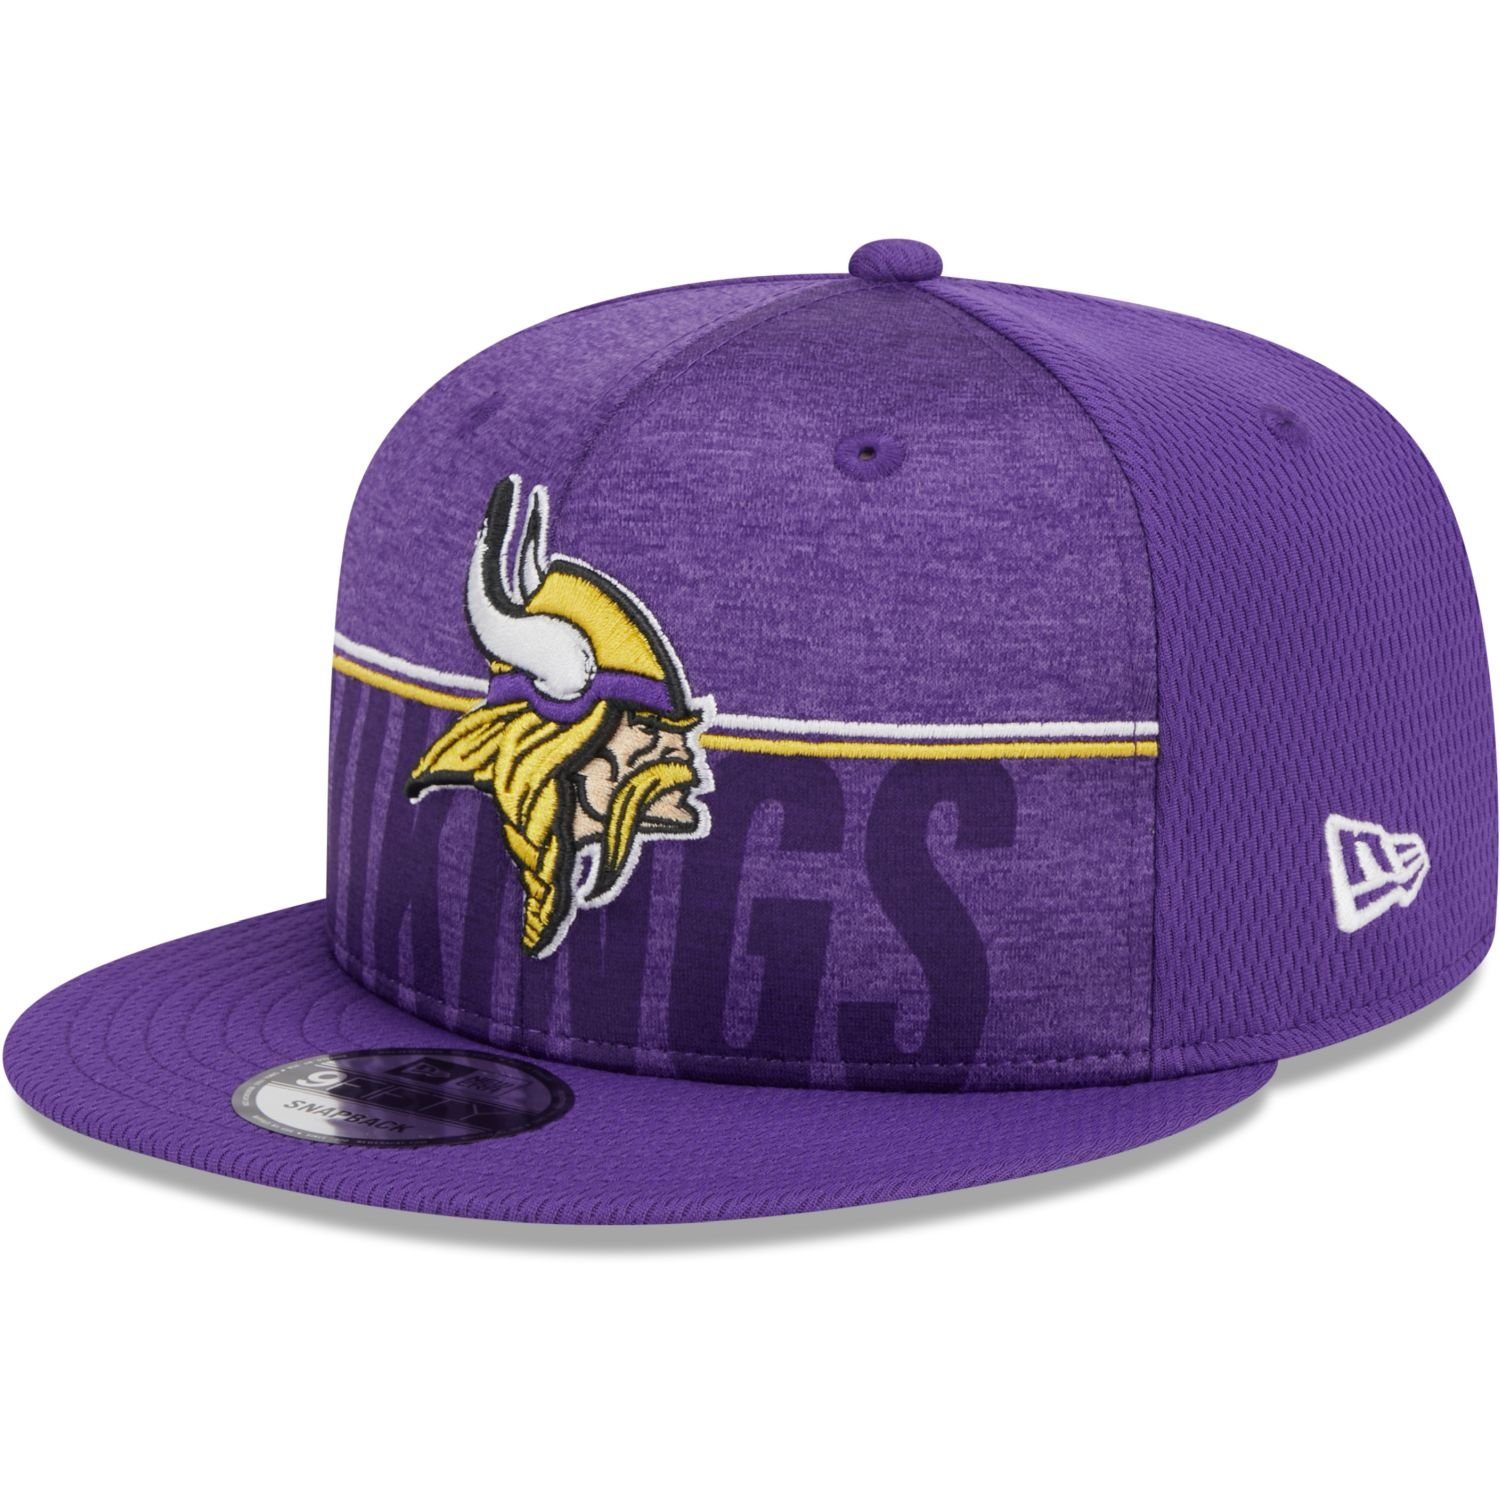 New Era Snapback Cap 9FIFTY TRAINING Minnesota Vikings